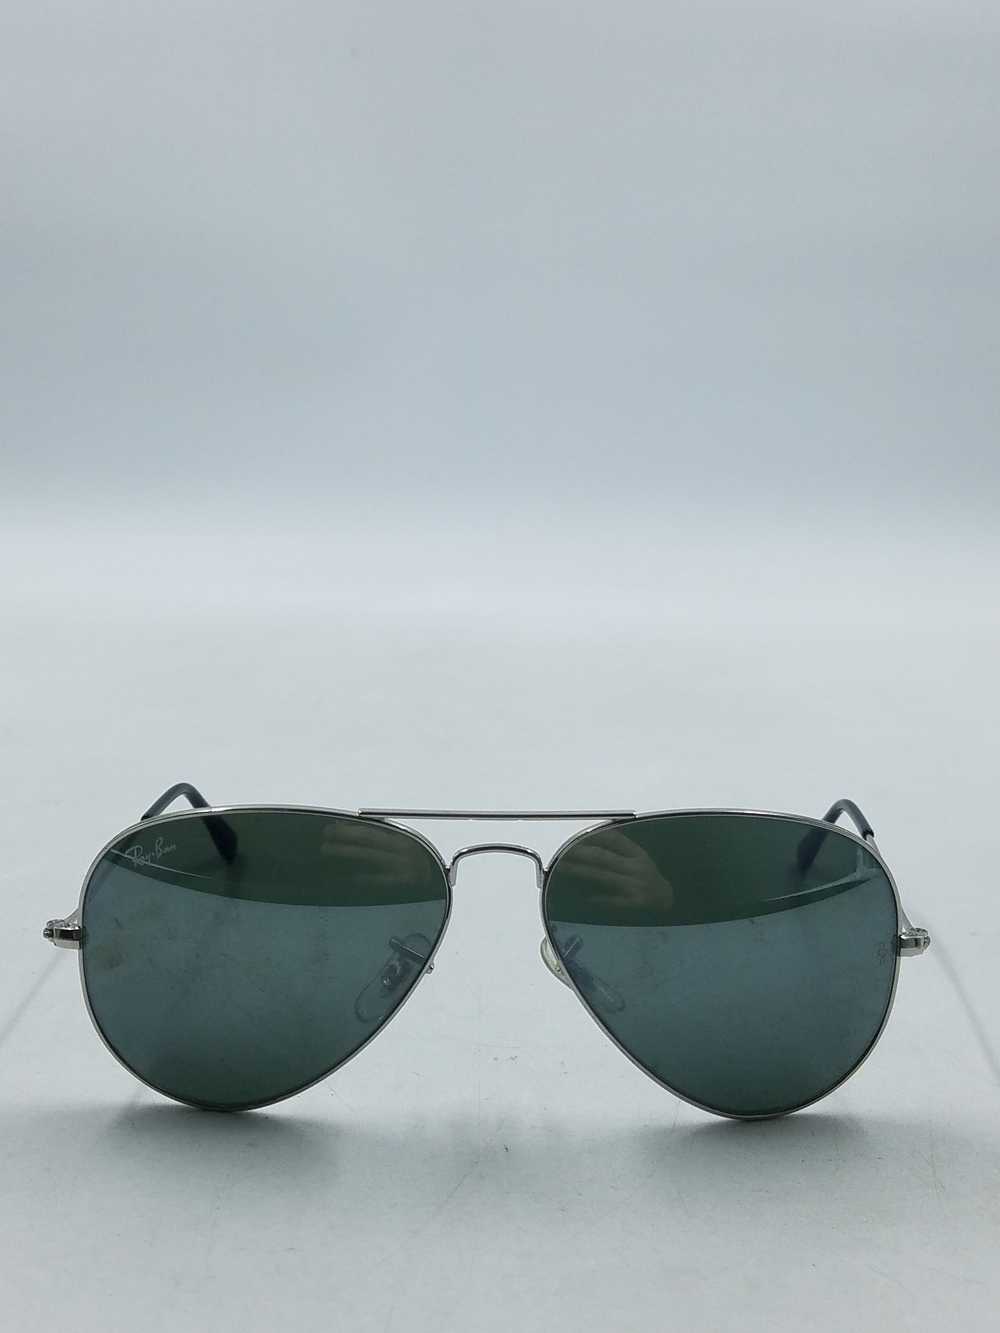 Ray-Ban Silver Aviator Large Sunglasses - image 2